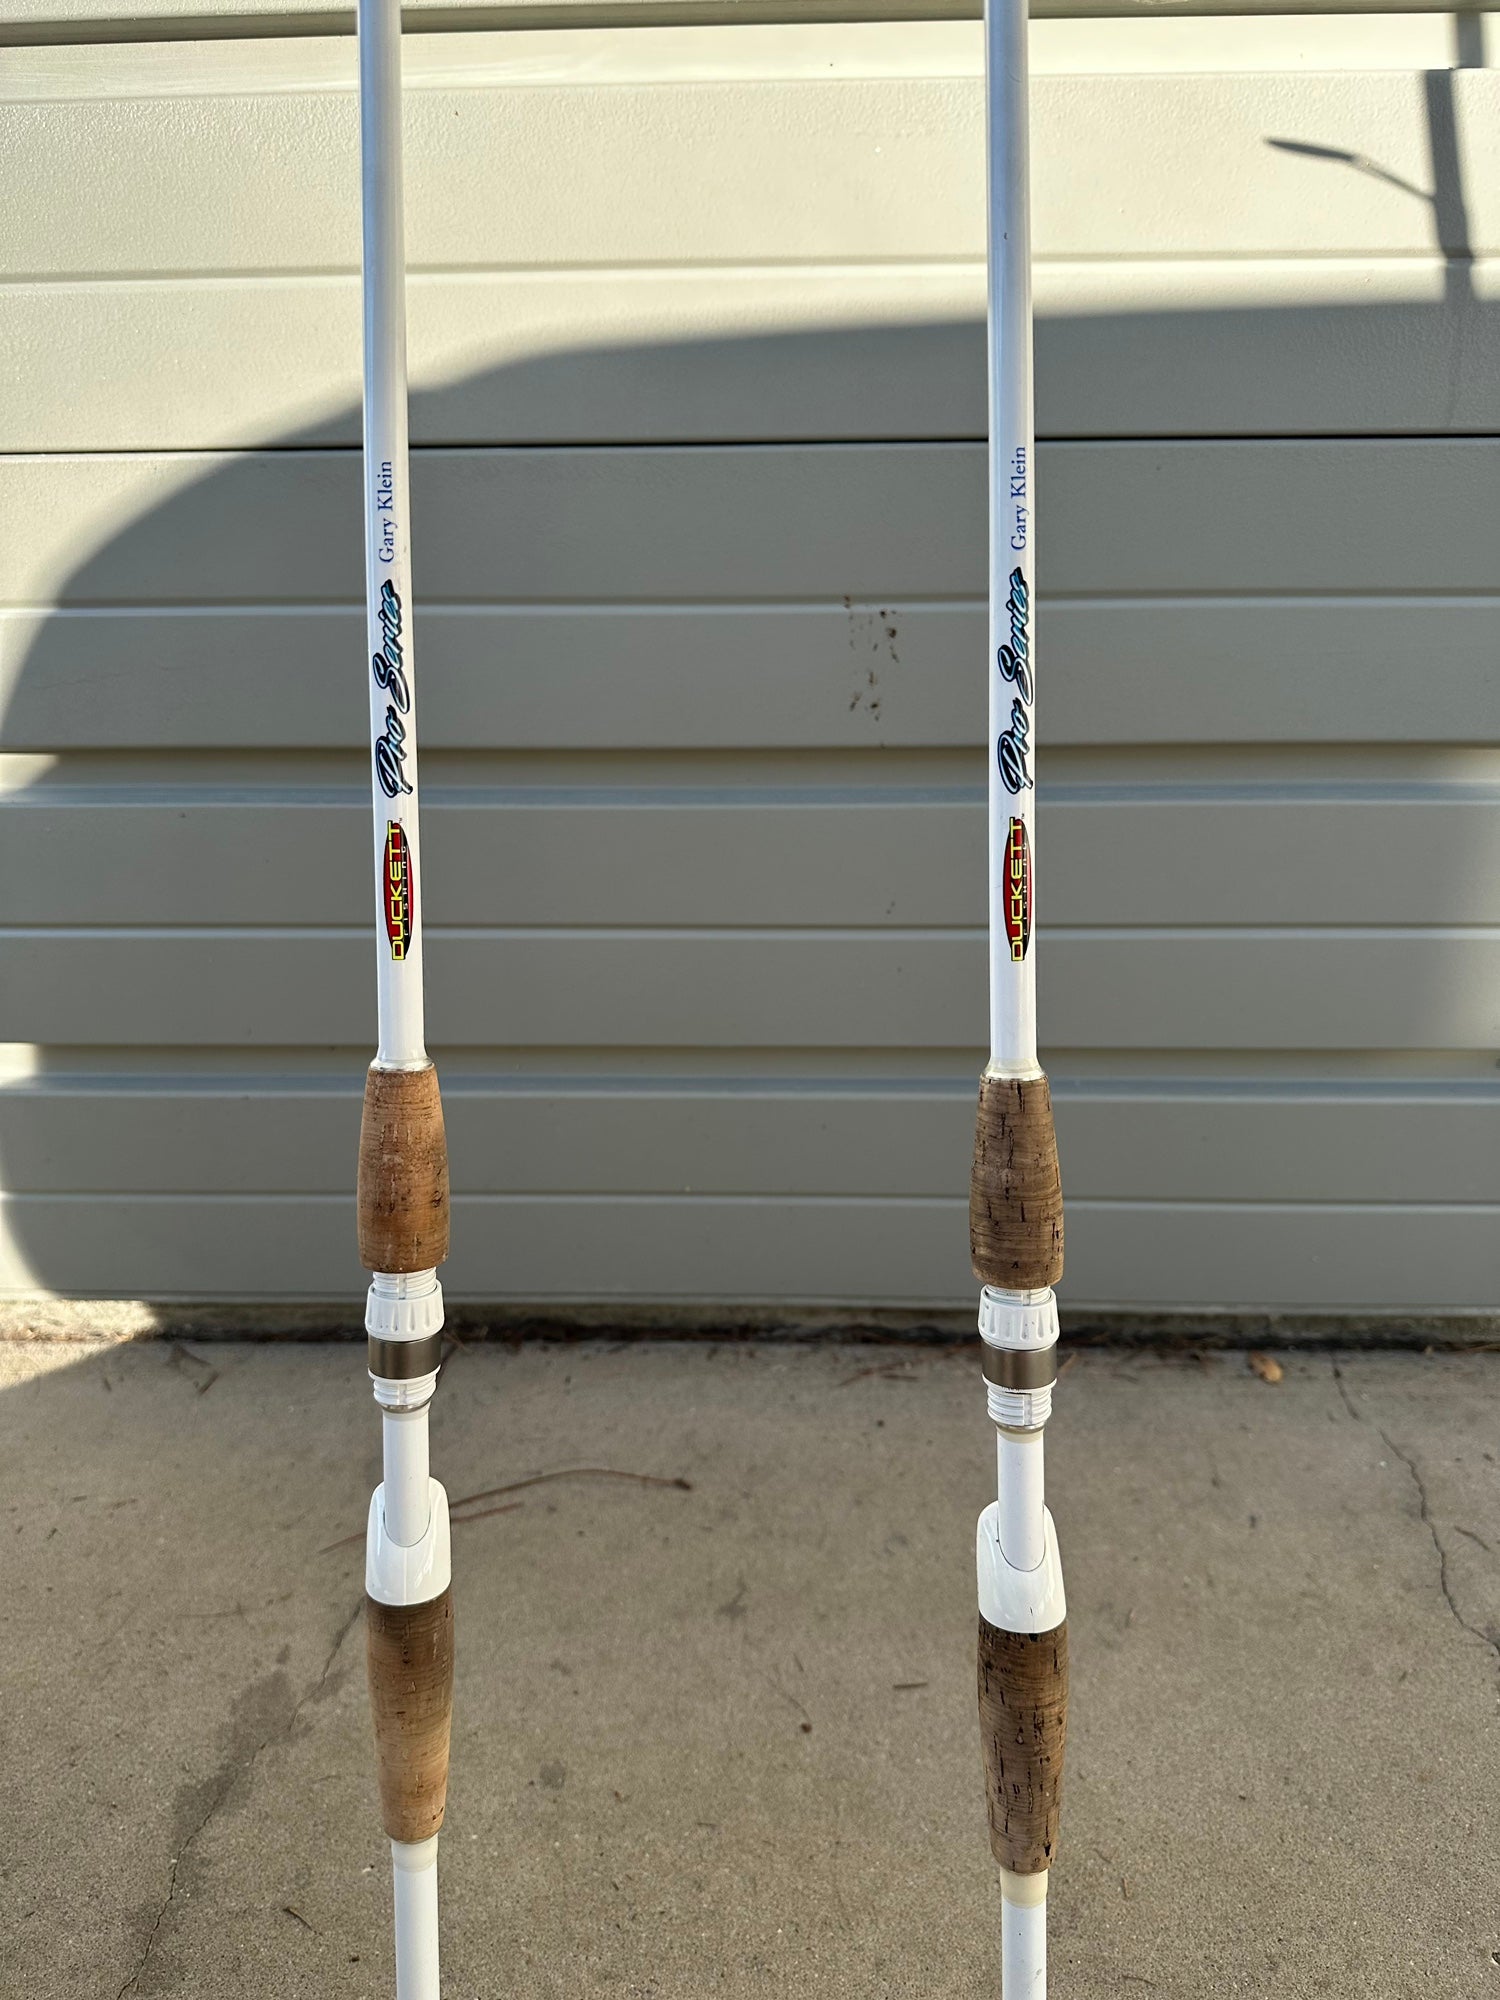 7'2” Duckett Pro Series Spinning Rod